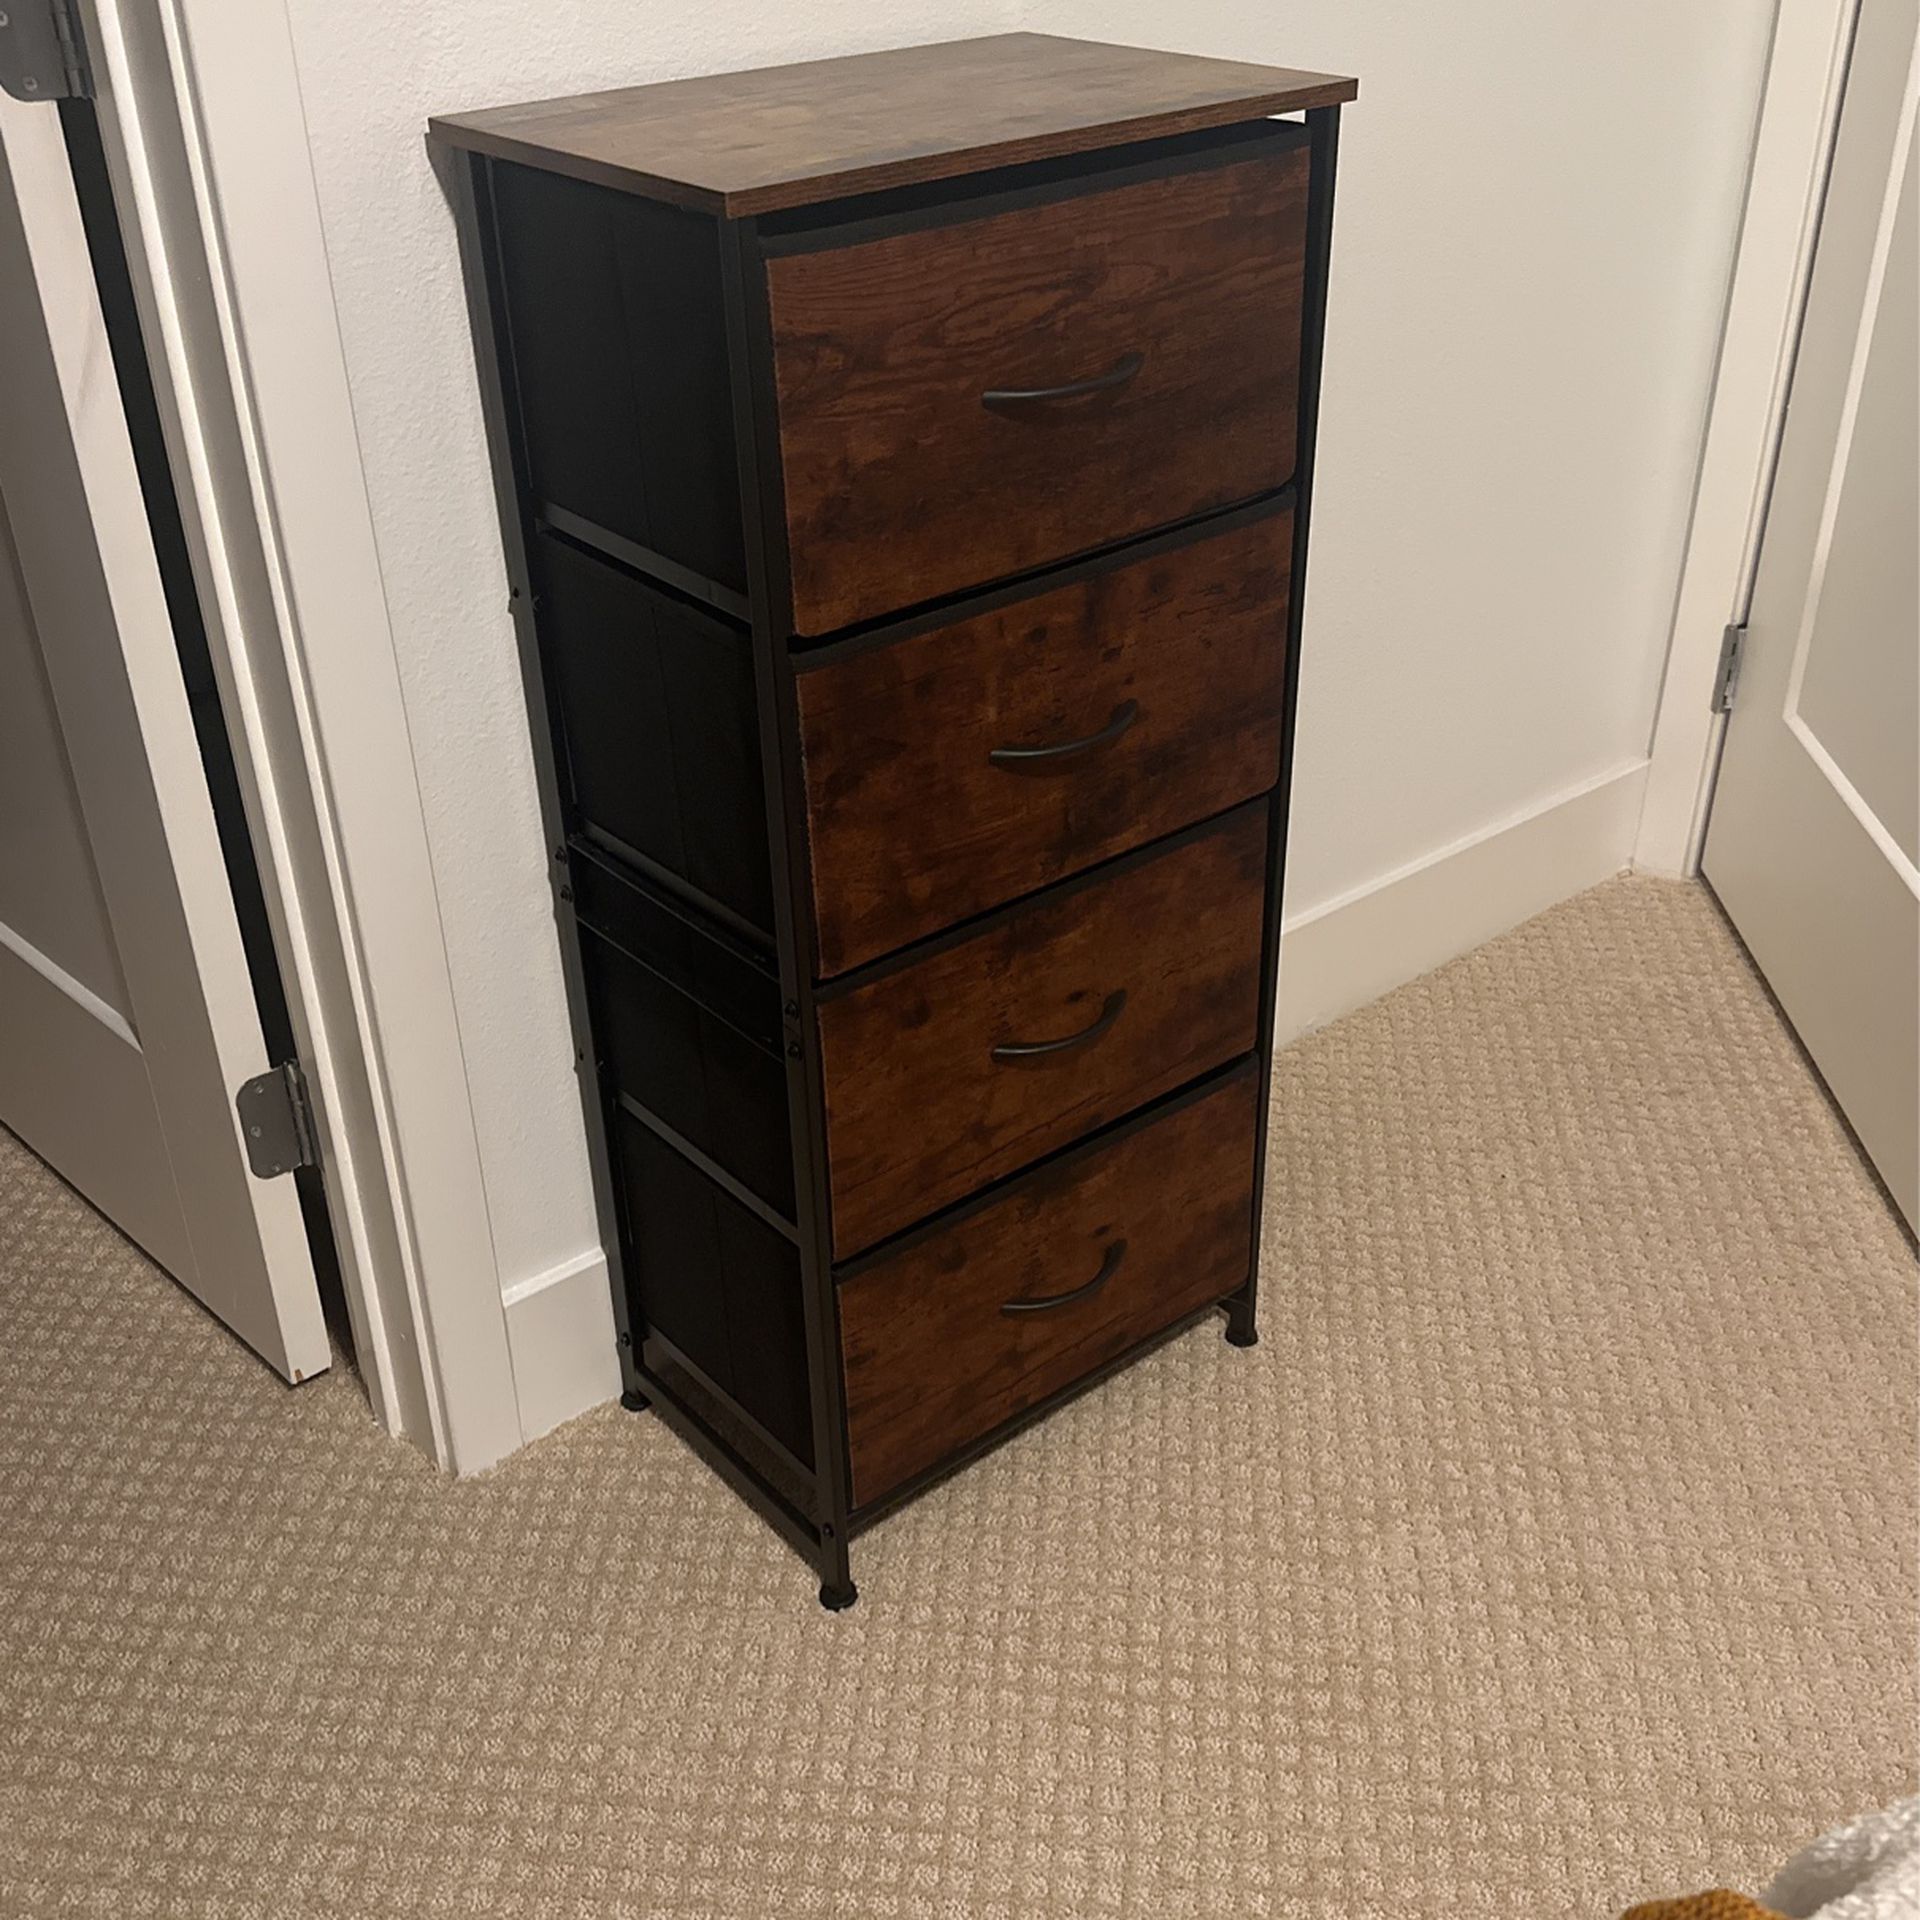 New 4 Drawer Wood Dresser And/ Or Storage Organizer